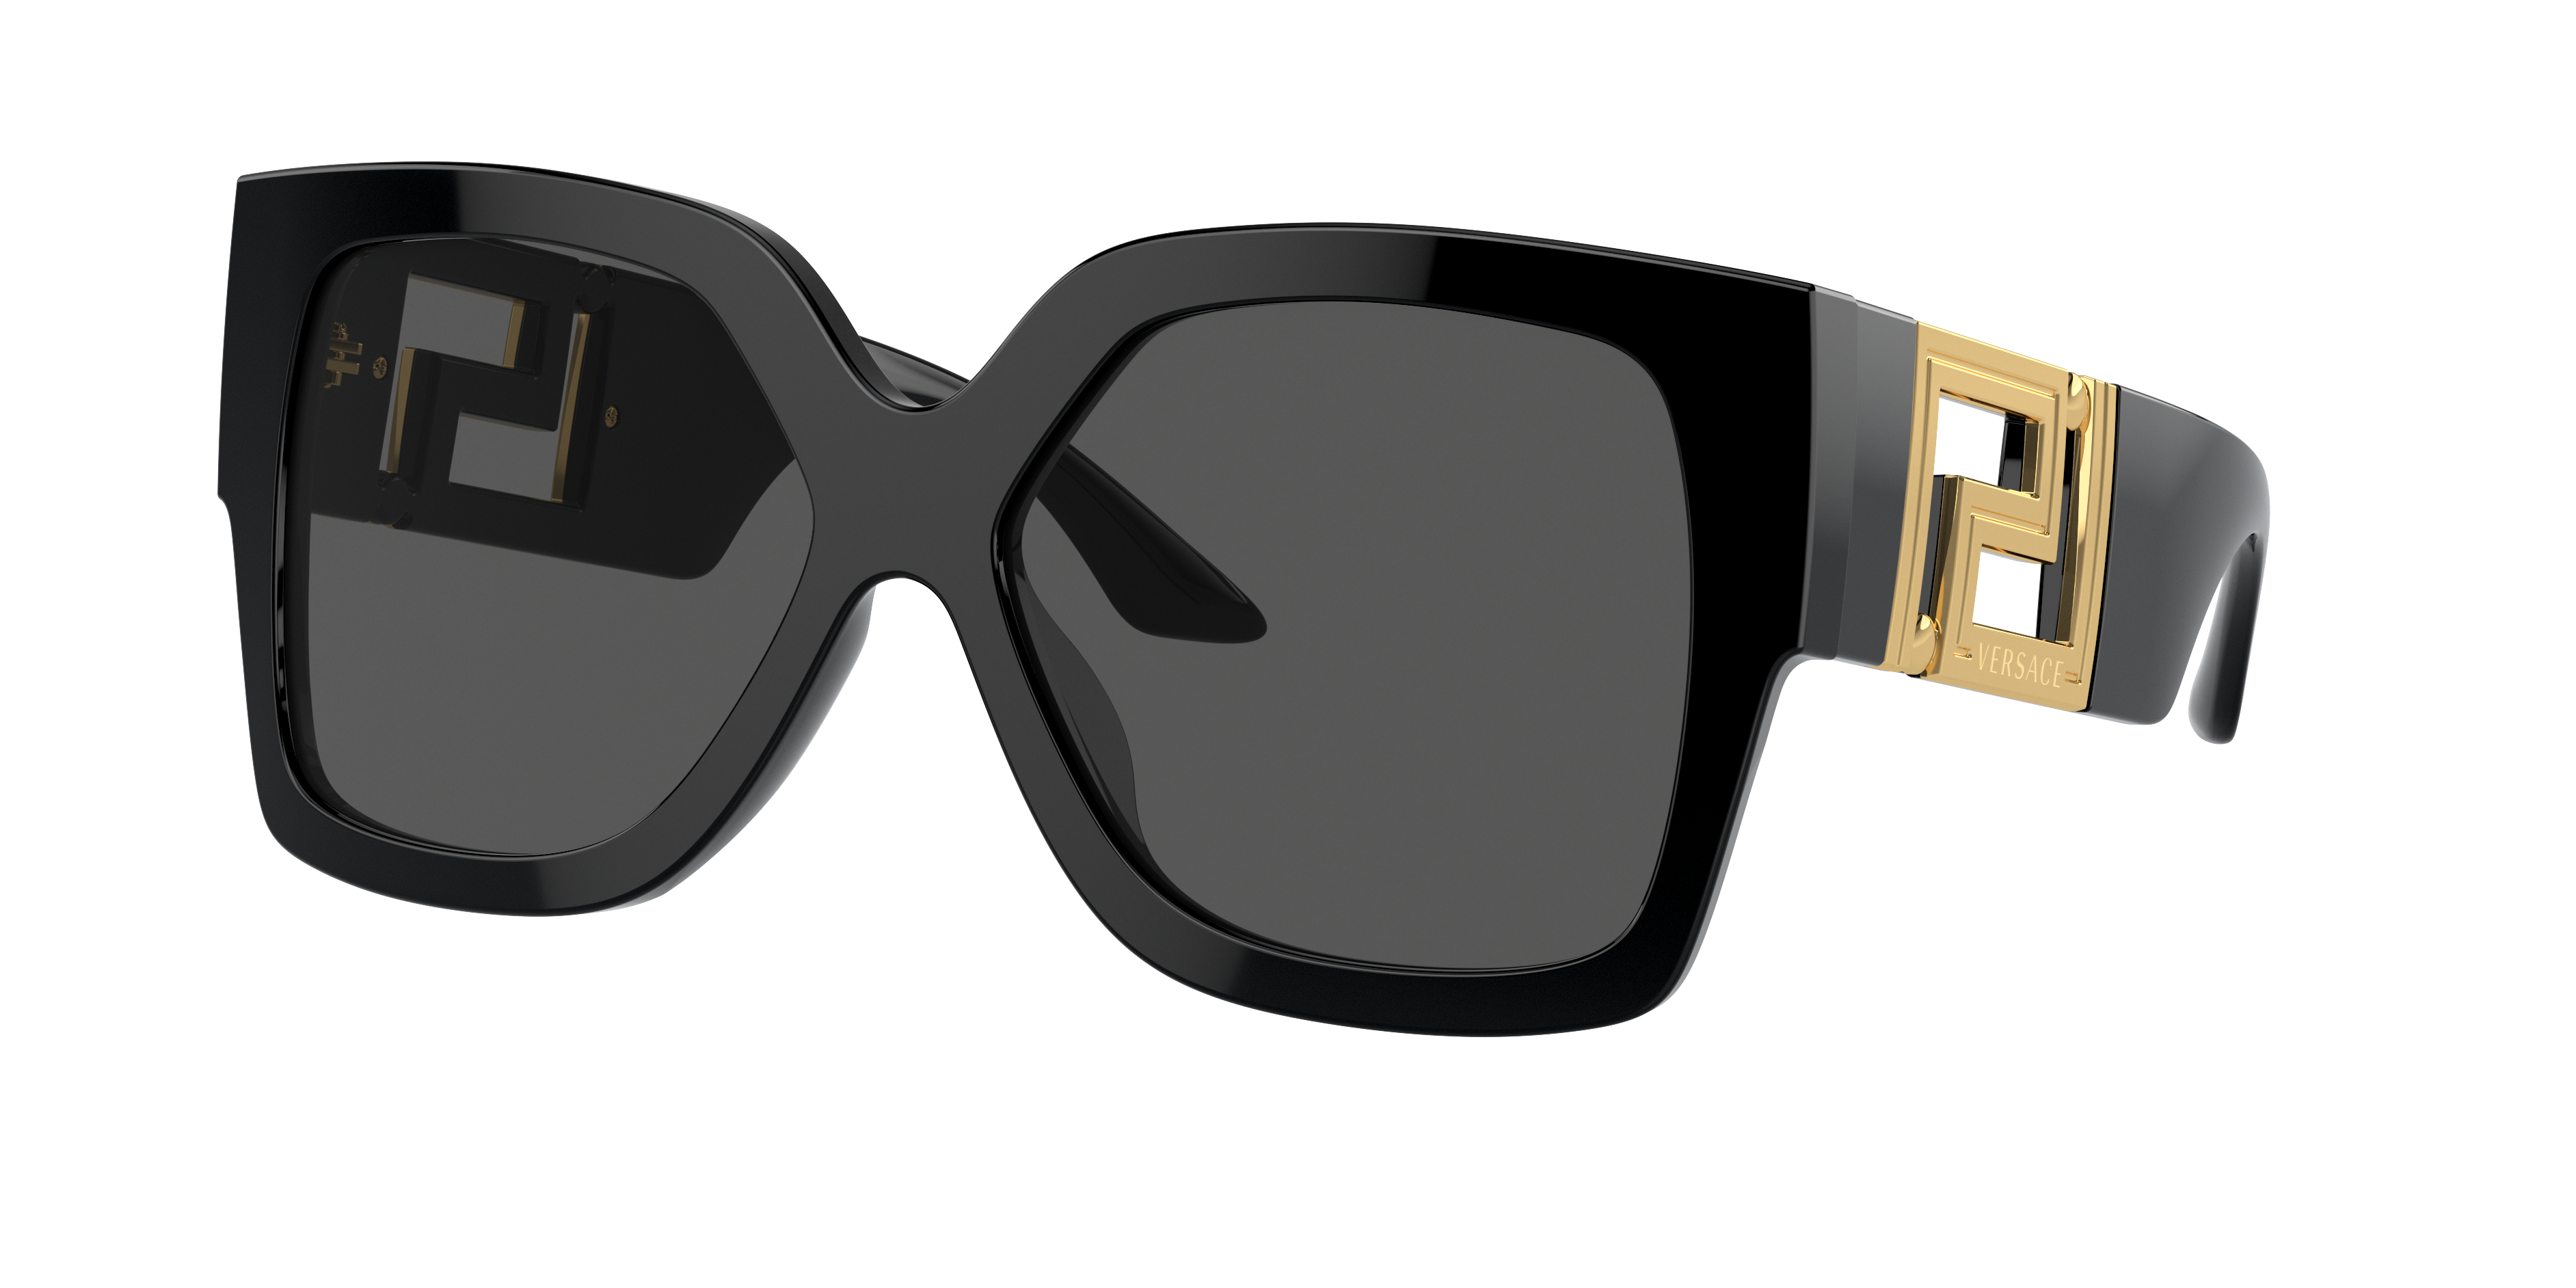 Versace Women's Ve4405 Square 54mm Sunglasses